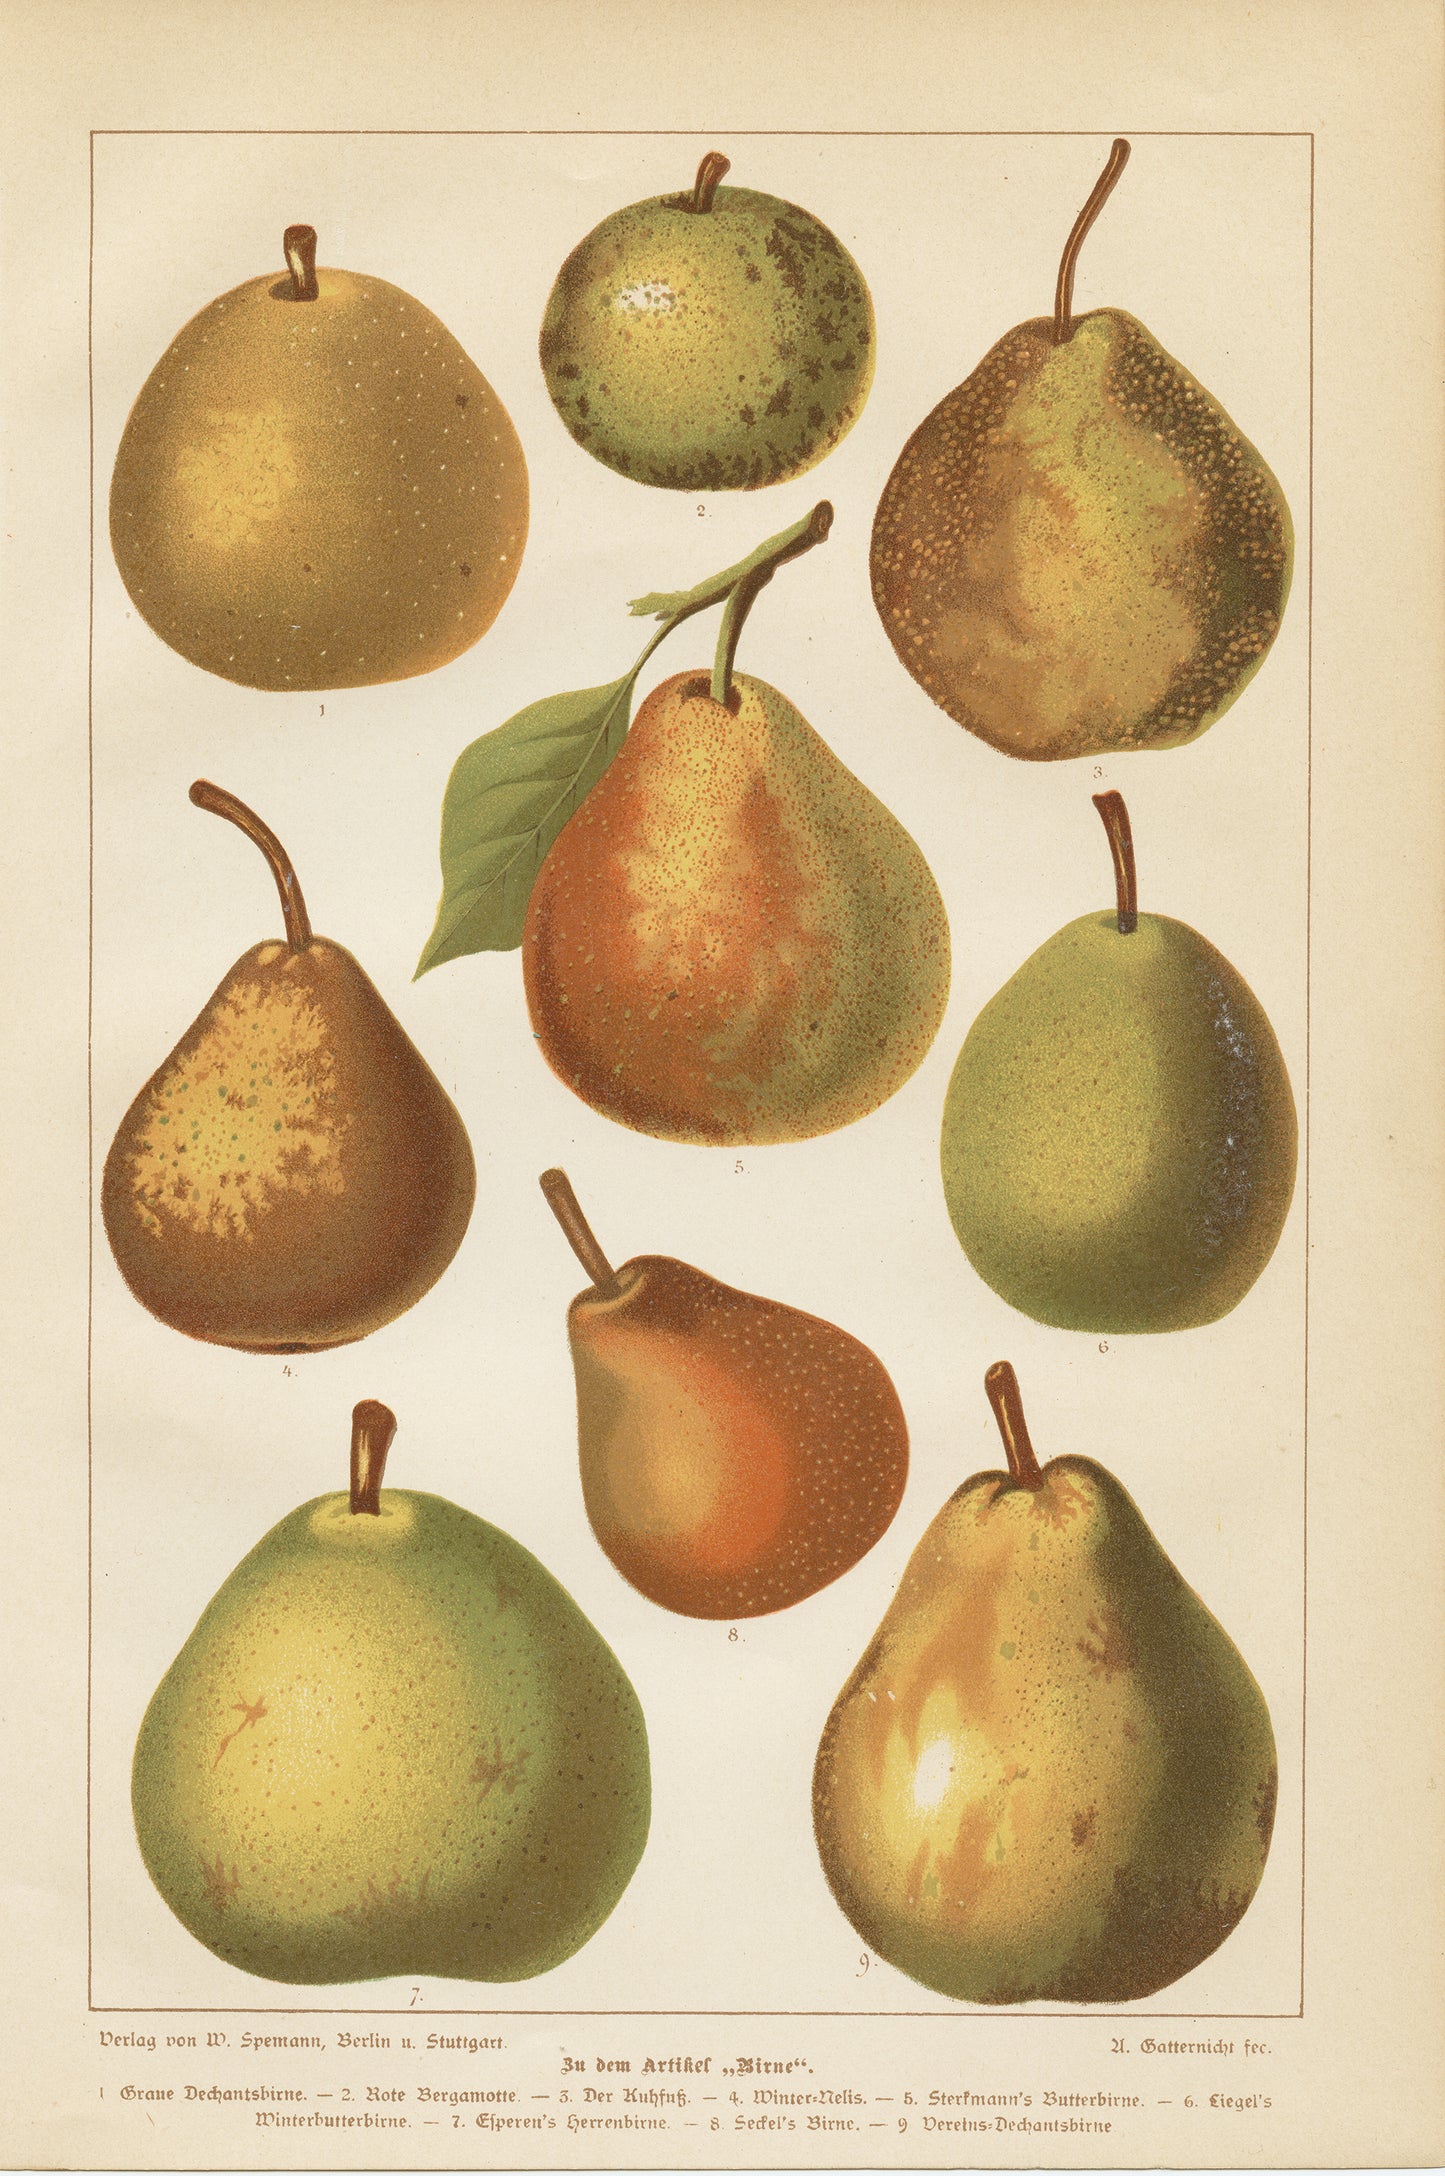 1890 Antique Pear botanical print - Pierers